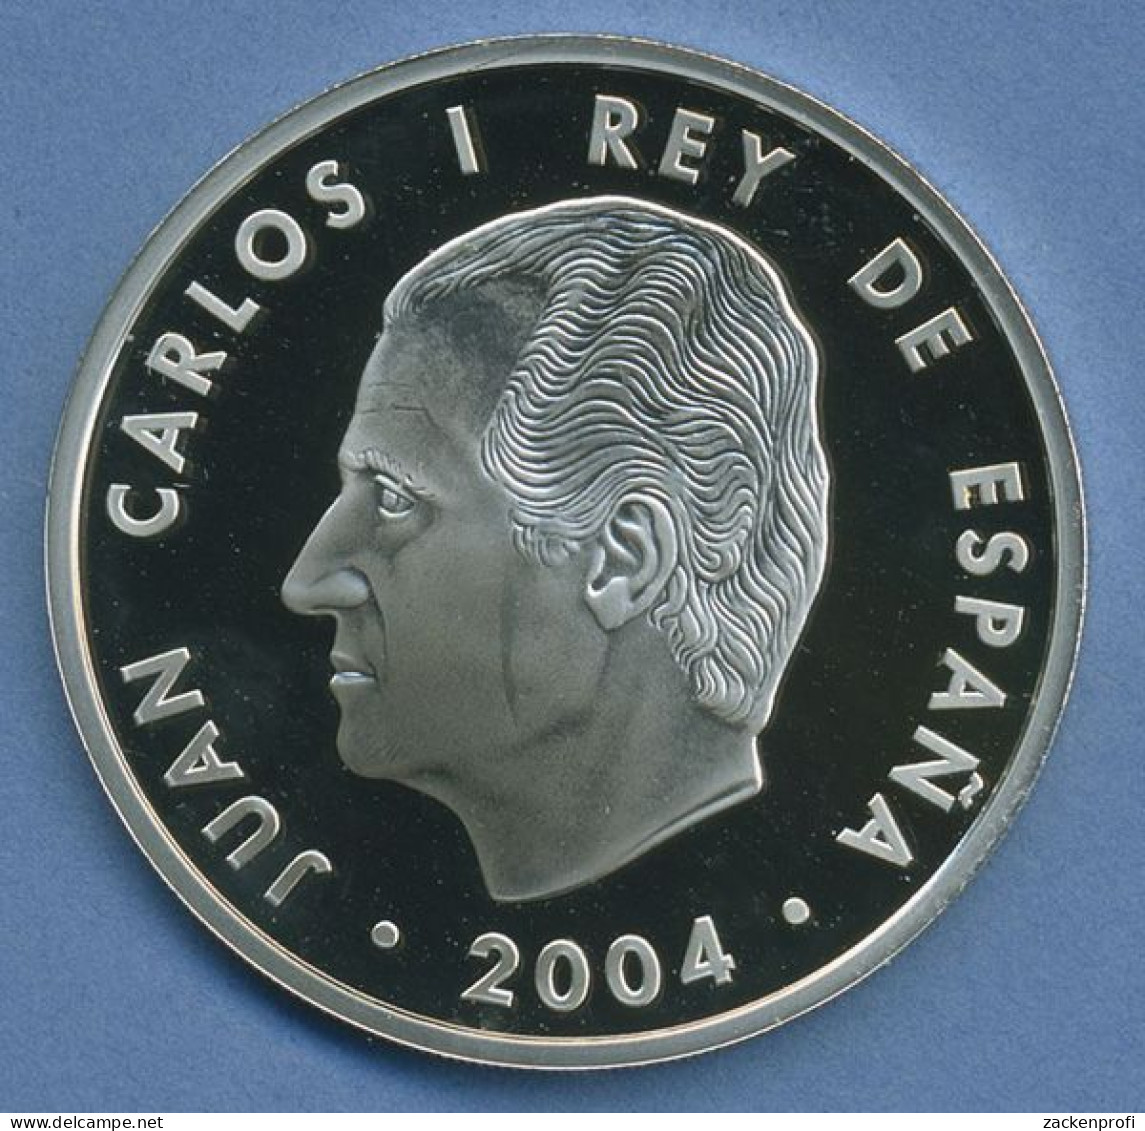 Spanien 10 Euro 2004 Europäische Union EU, Silber, KM 1099 PP (m4402) - Spain